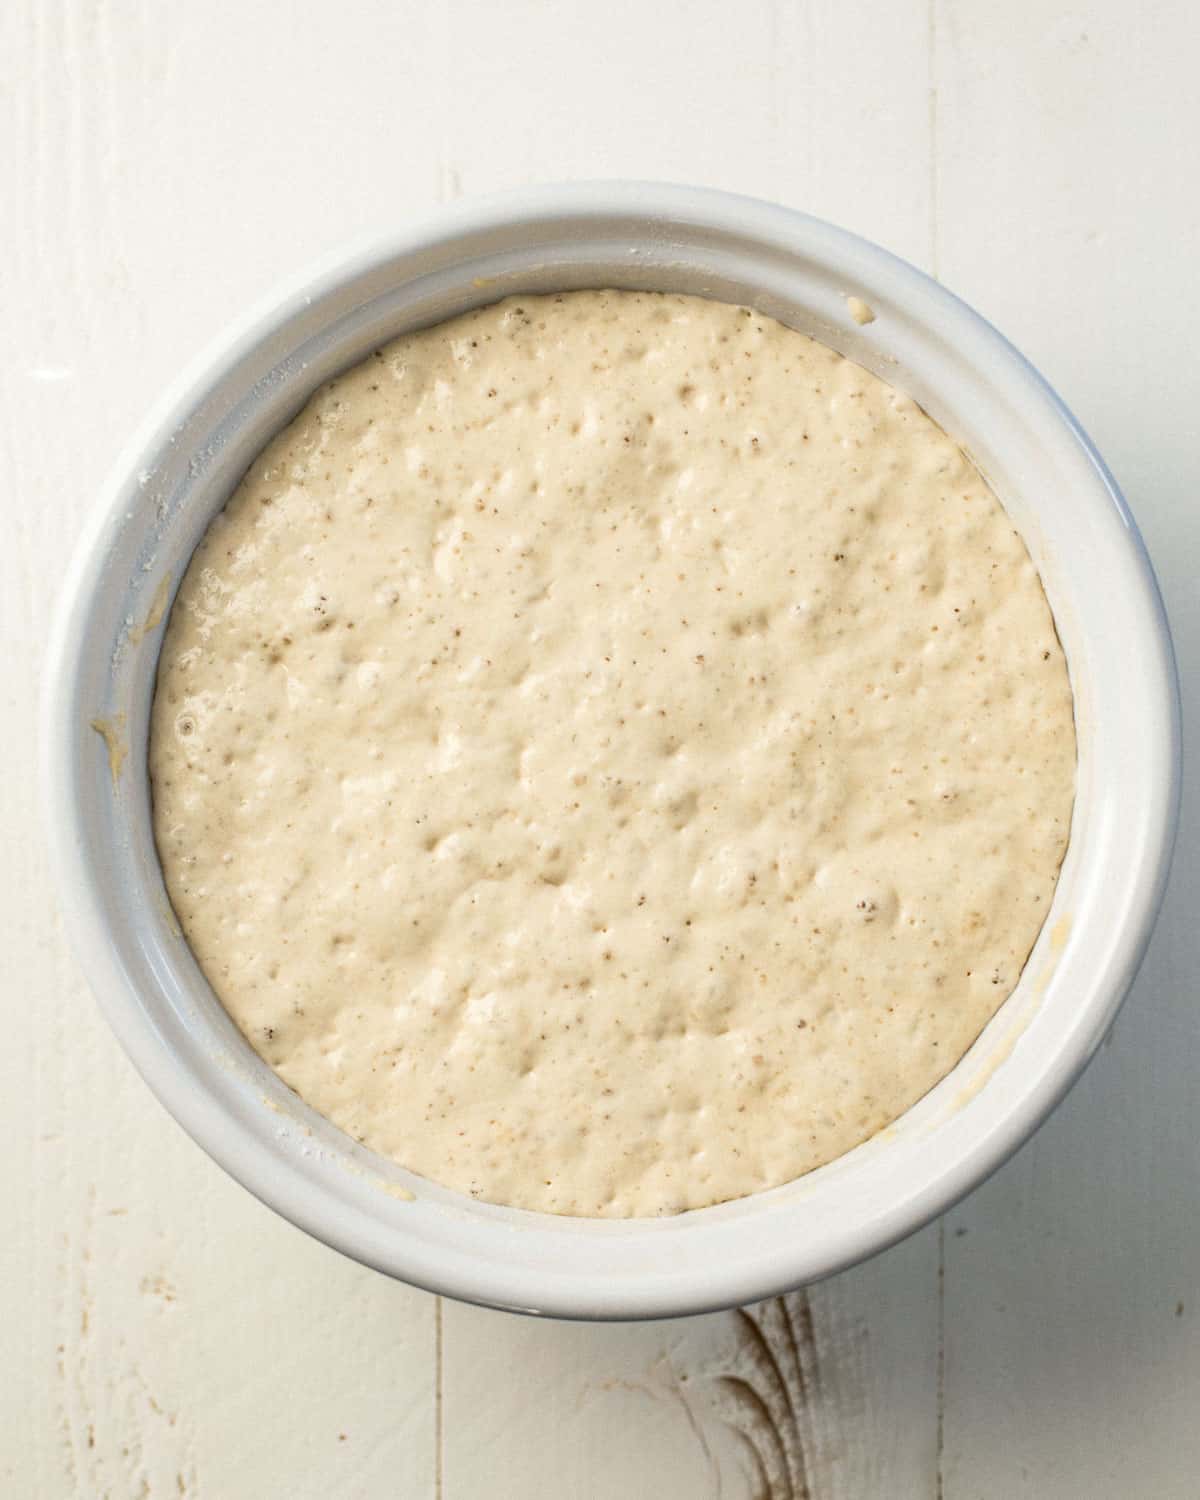 bagel sponge rising in a bowl